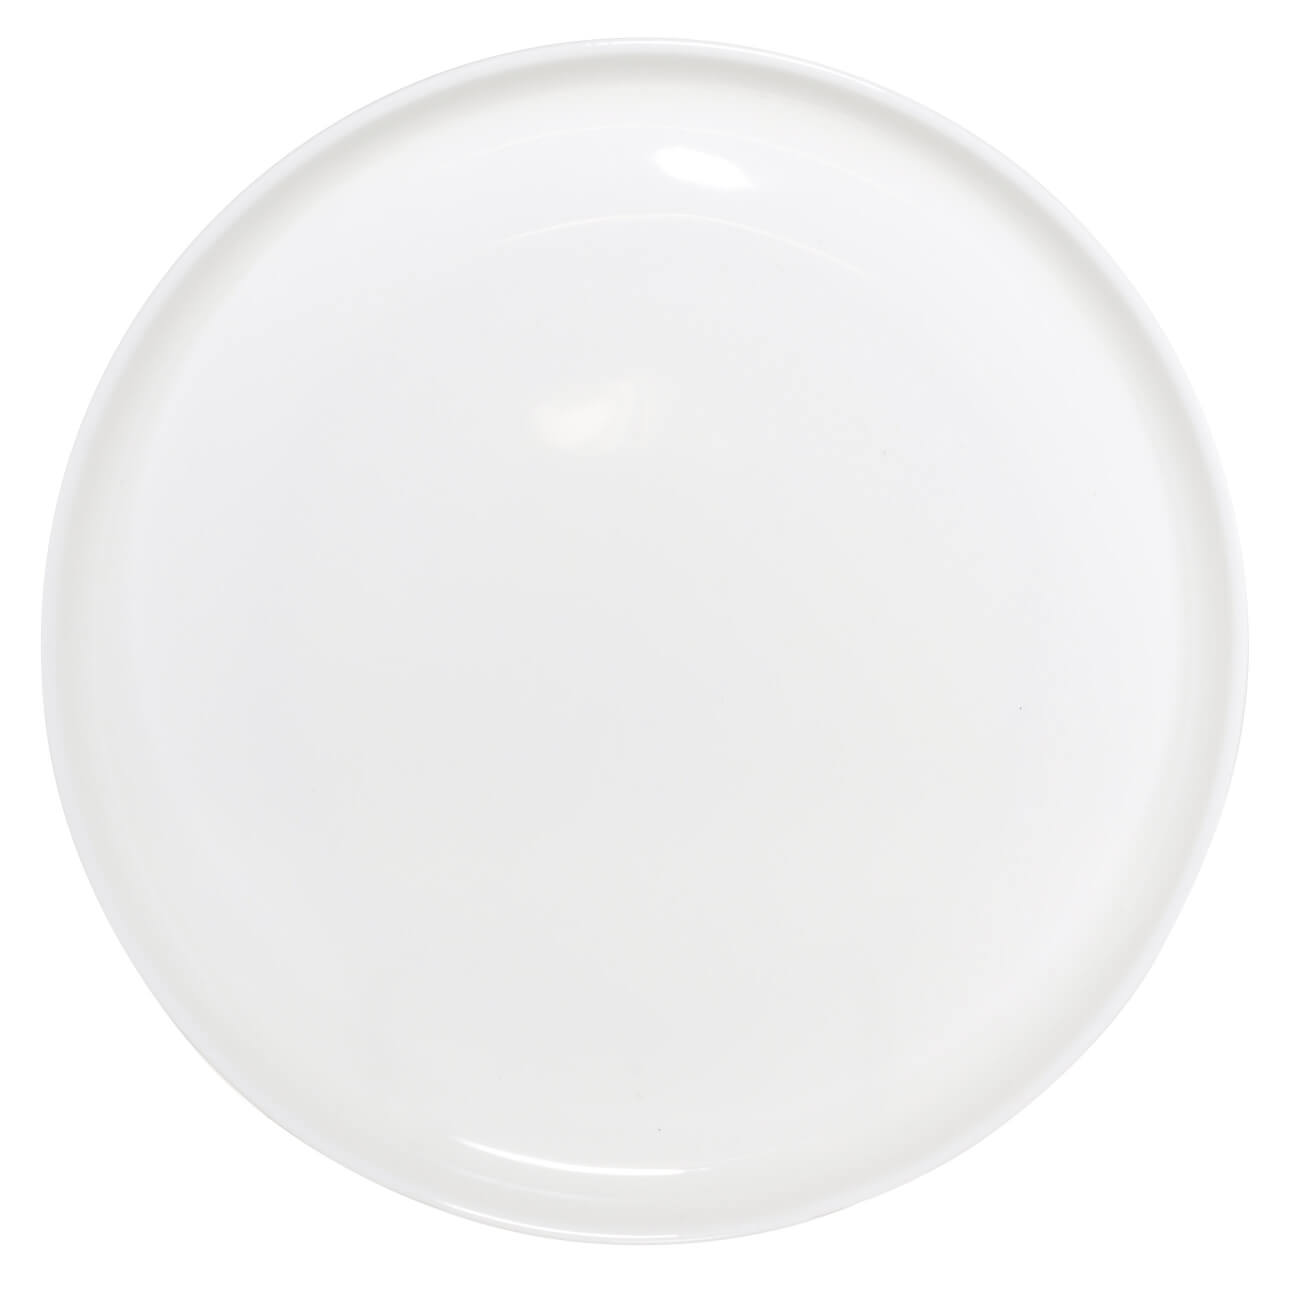 Тарелка обеденная, 26 см, фарфор F, белая, Ideal white